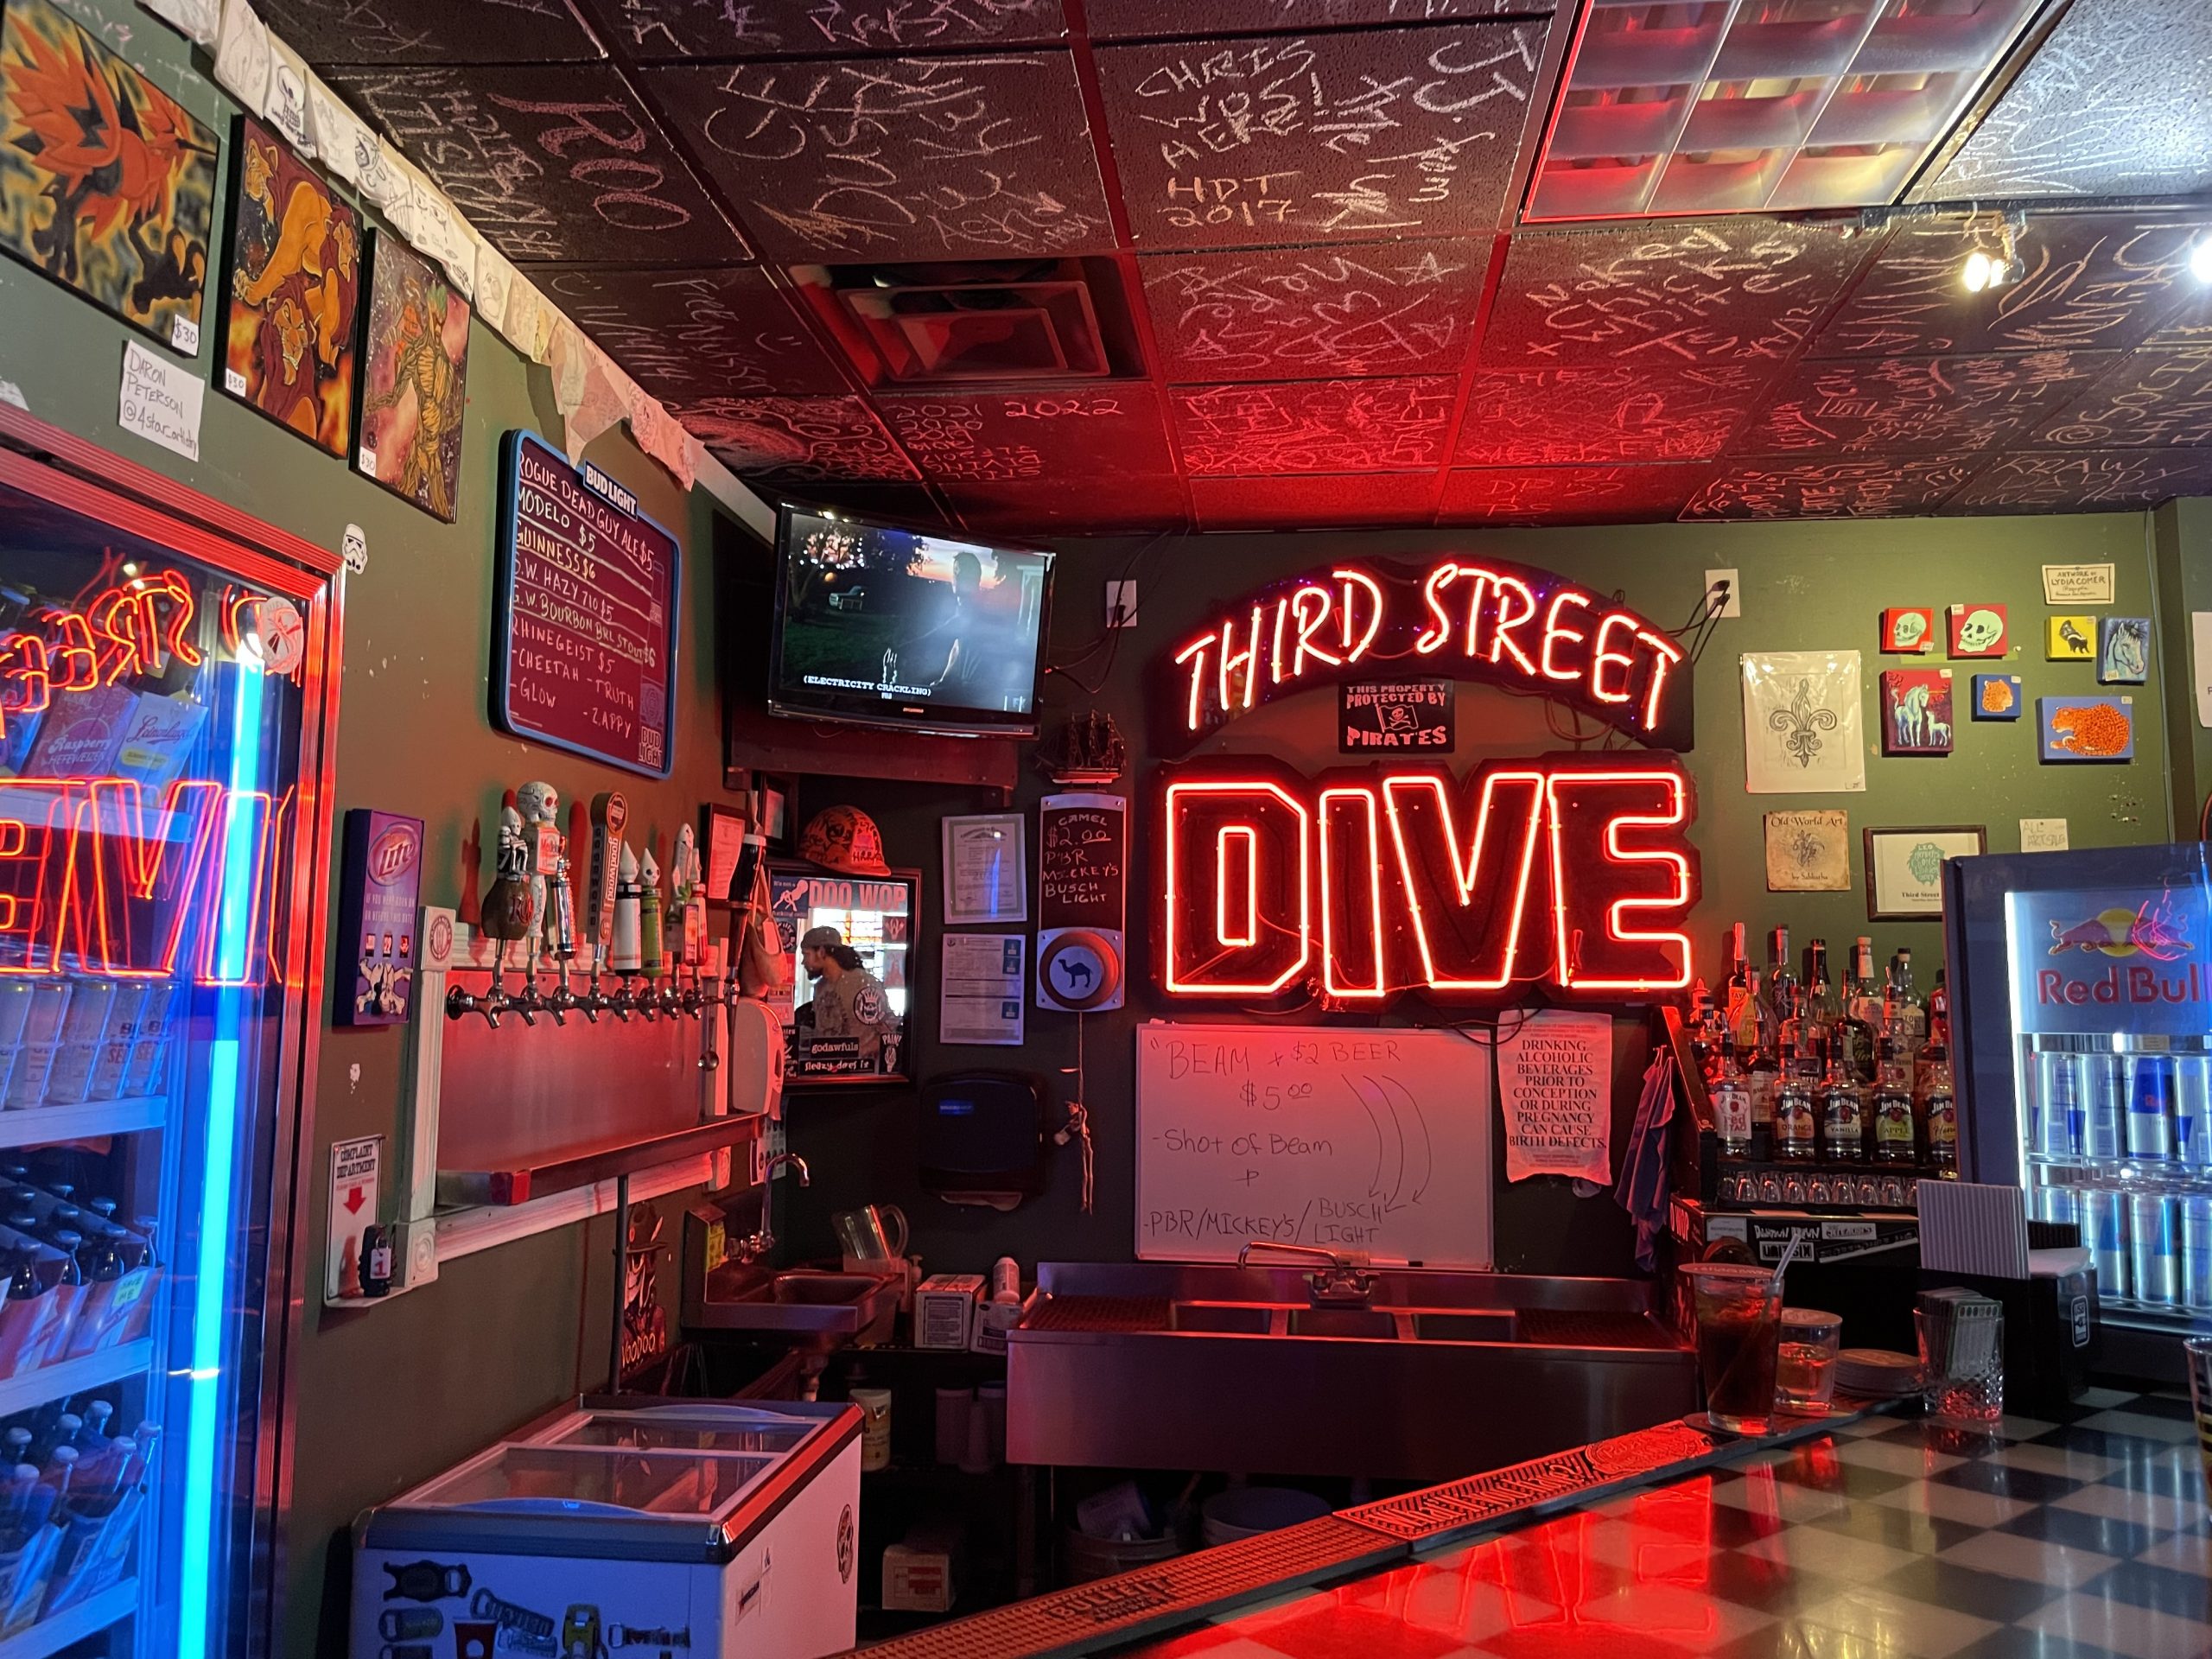 Third Street Dive - Louisville Dive Bar - Red Neon Sign